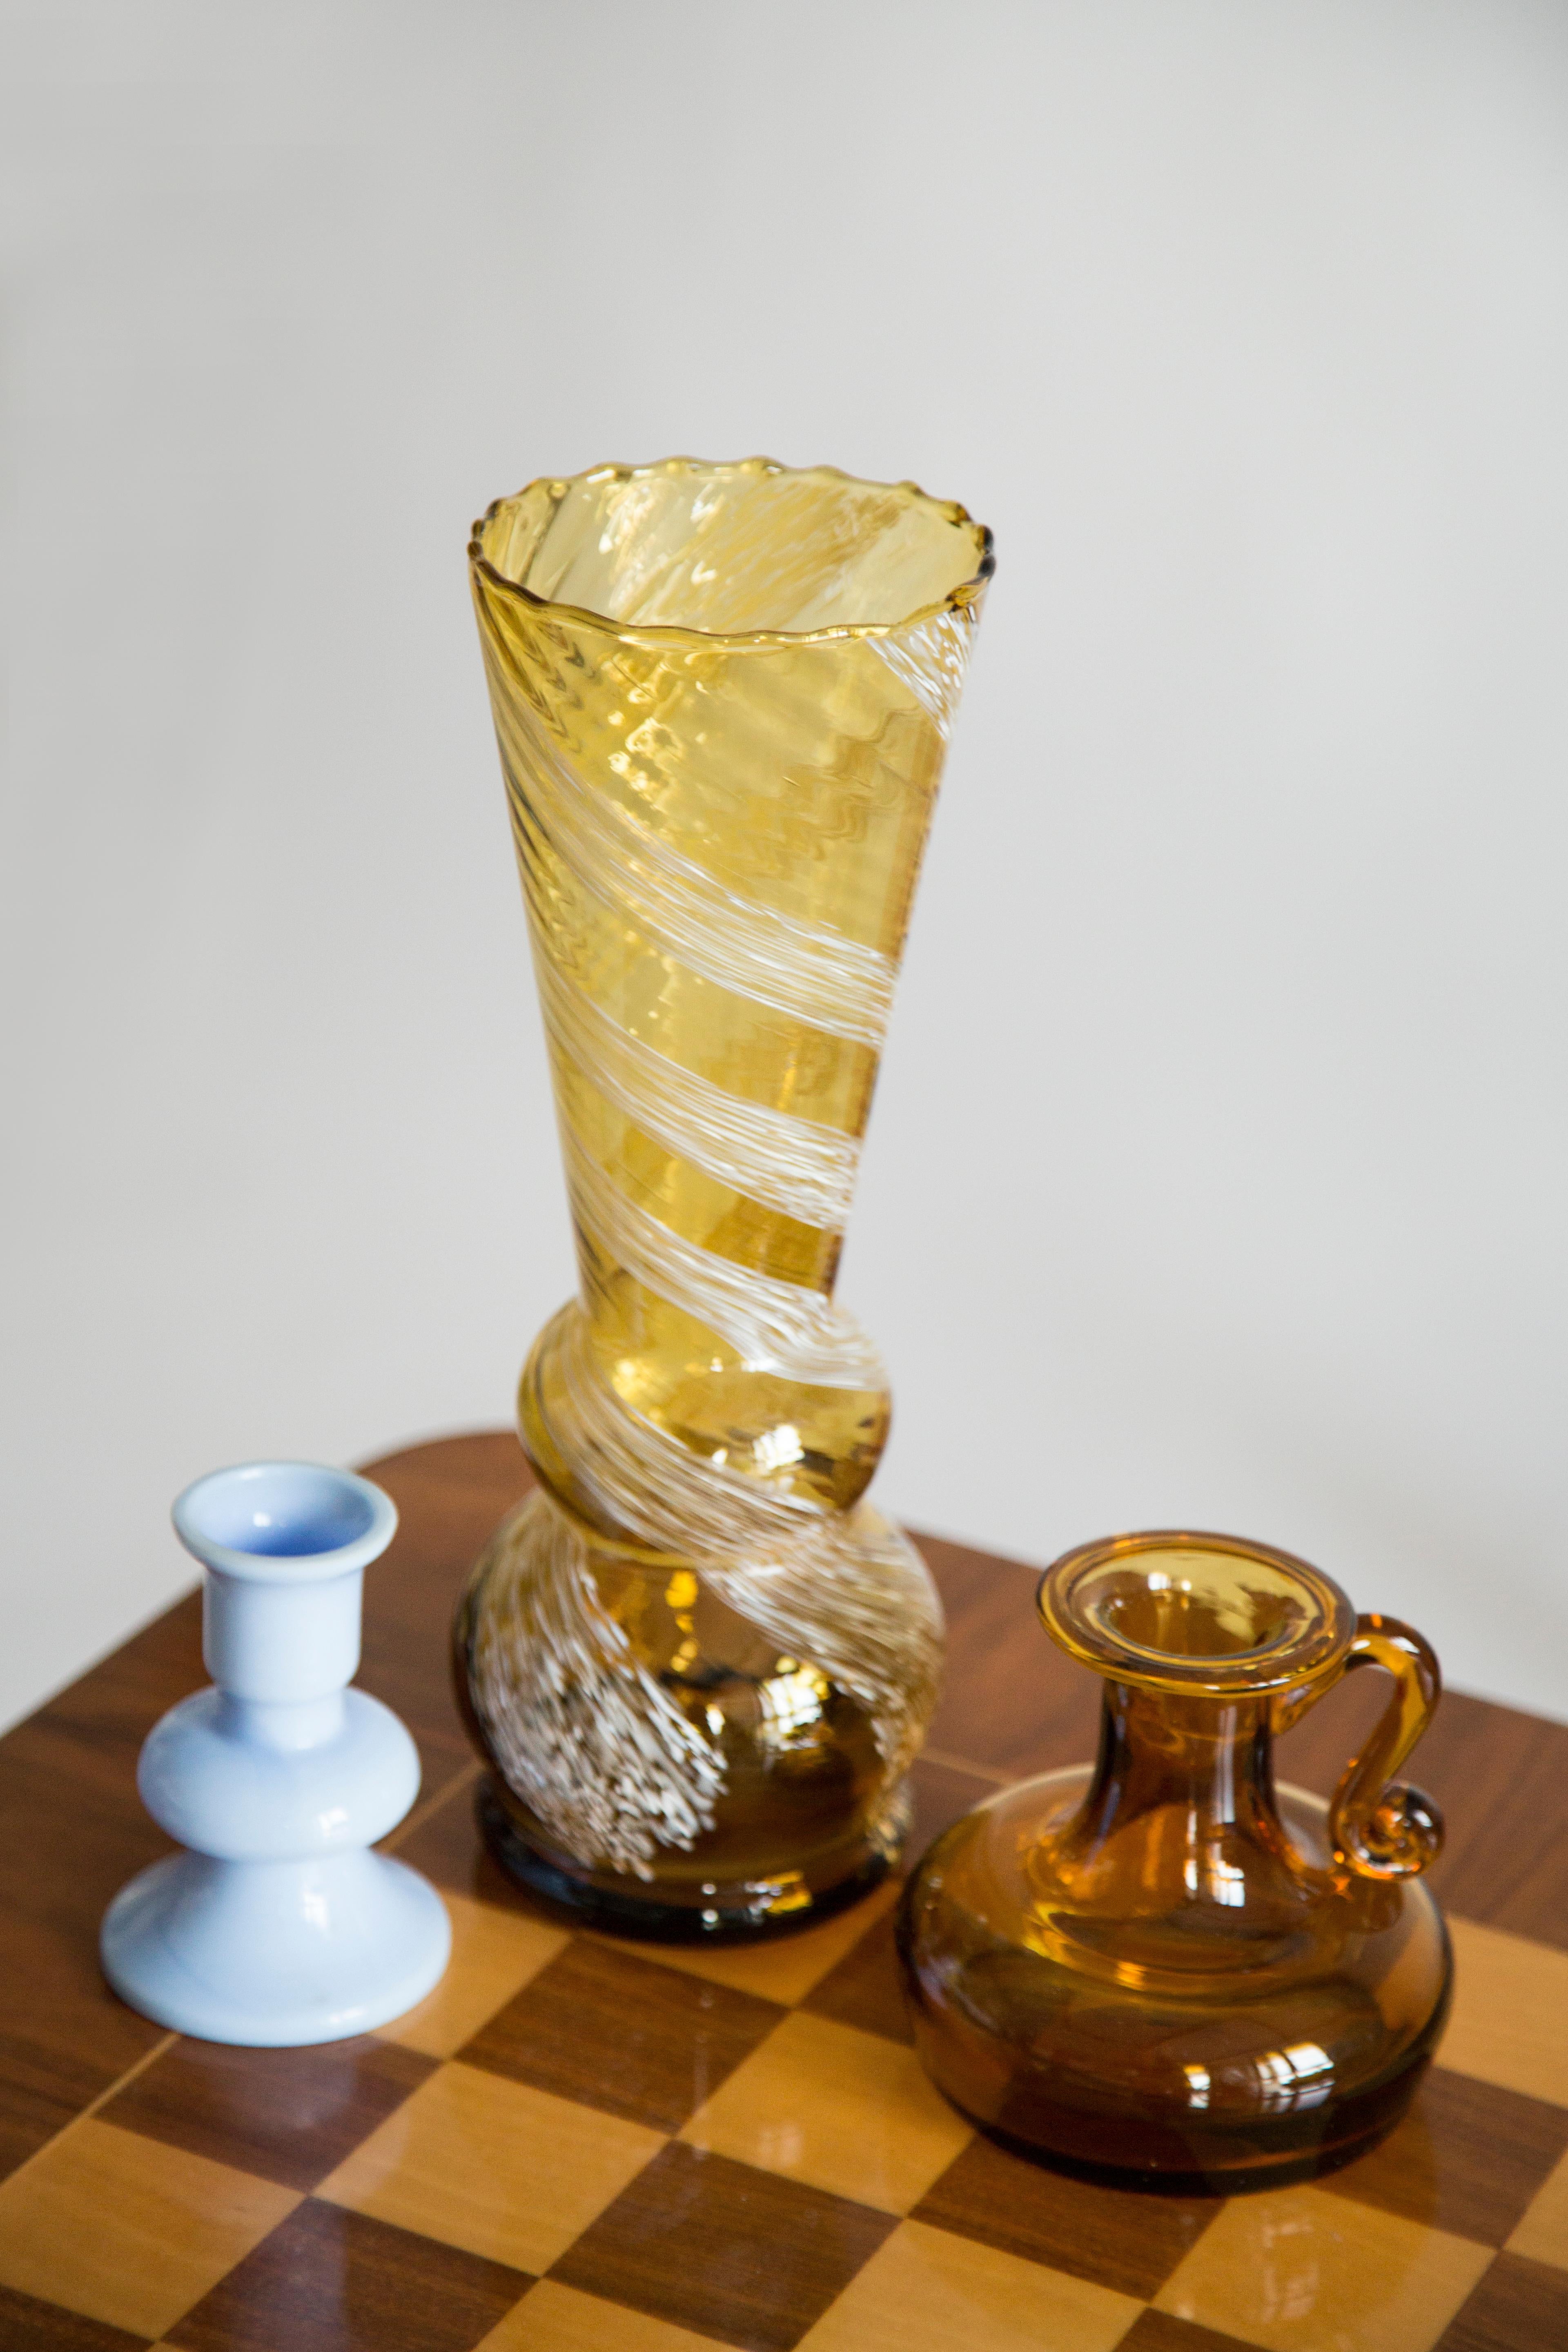 Polish Mid Century Artistic Glass Yellow Vase, Tarnowiec, Sulczan, Europe, 1970s For Sale